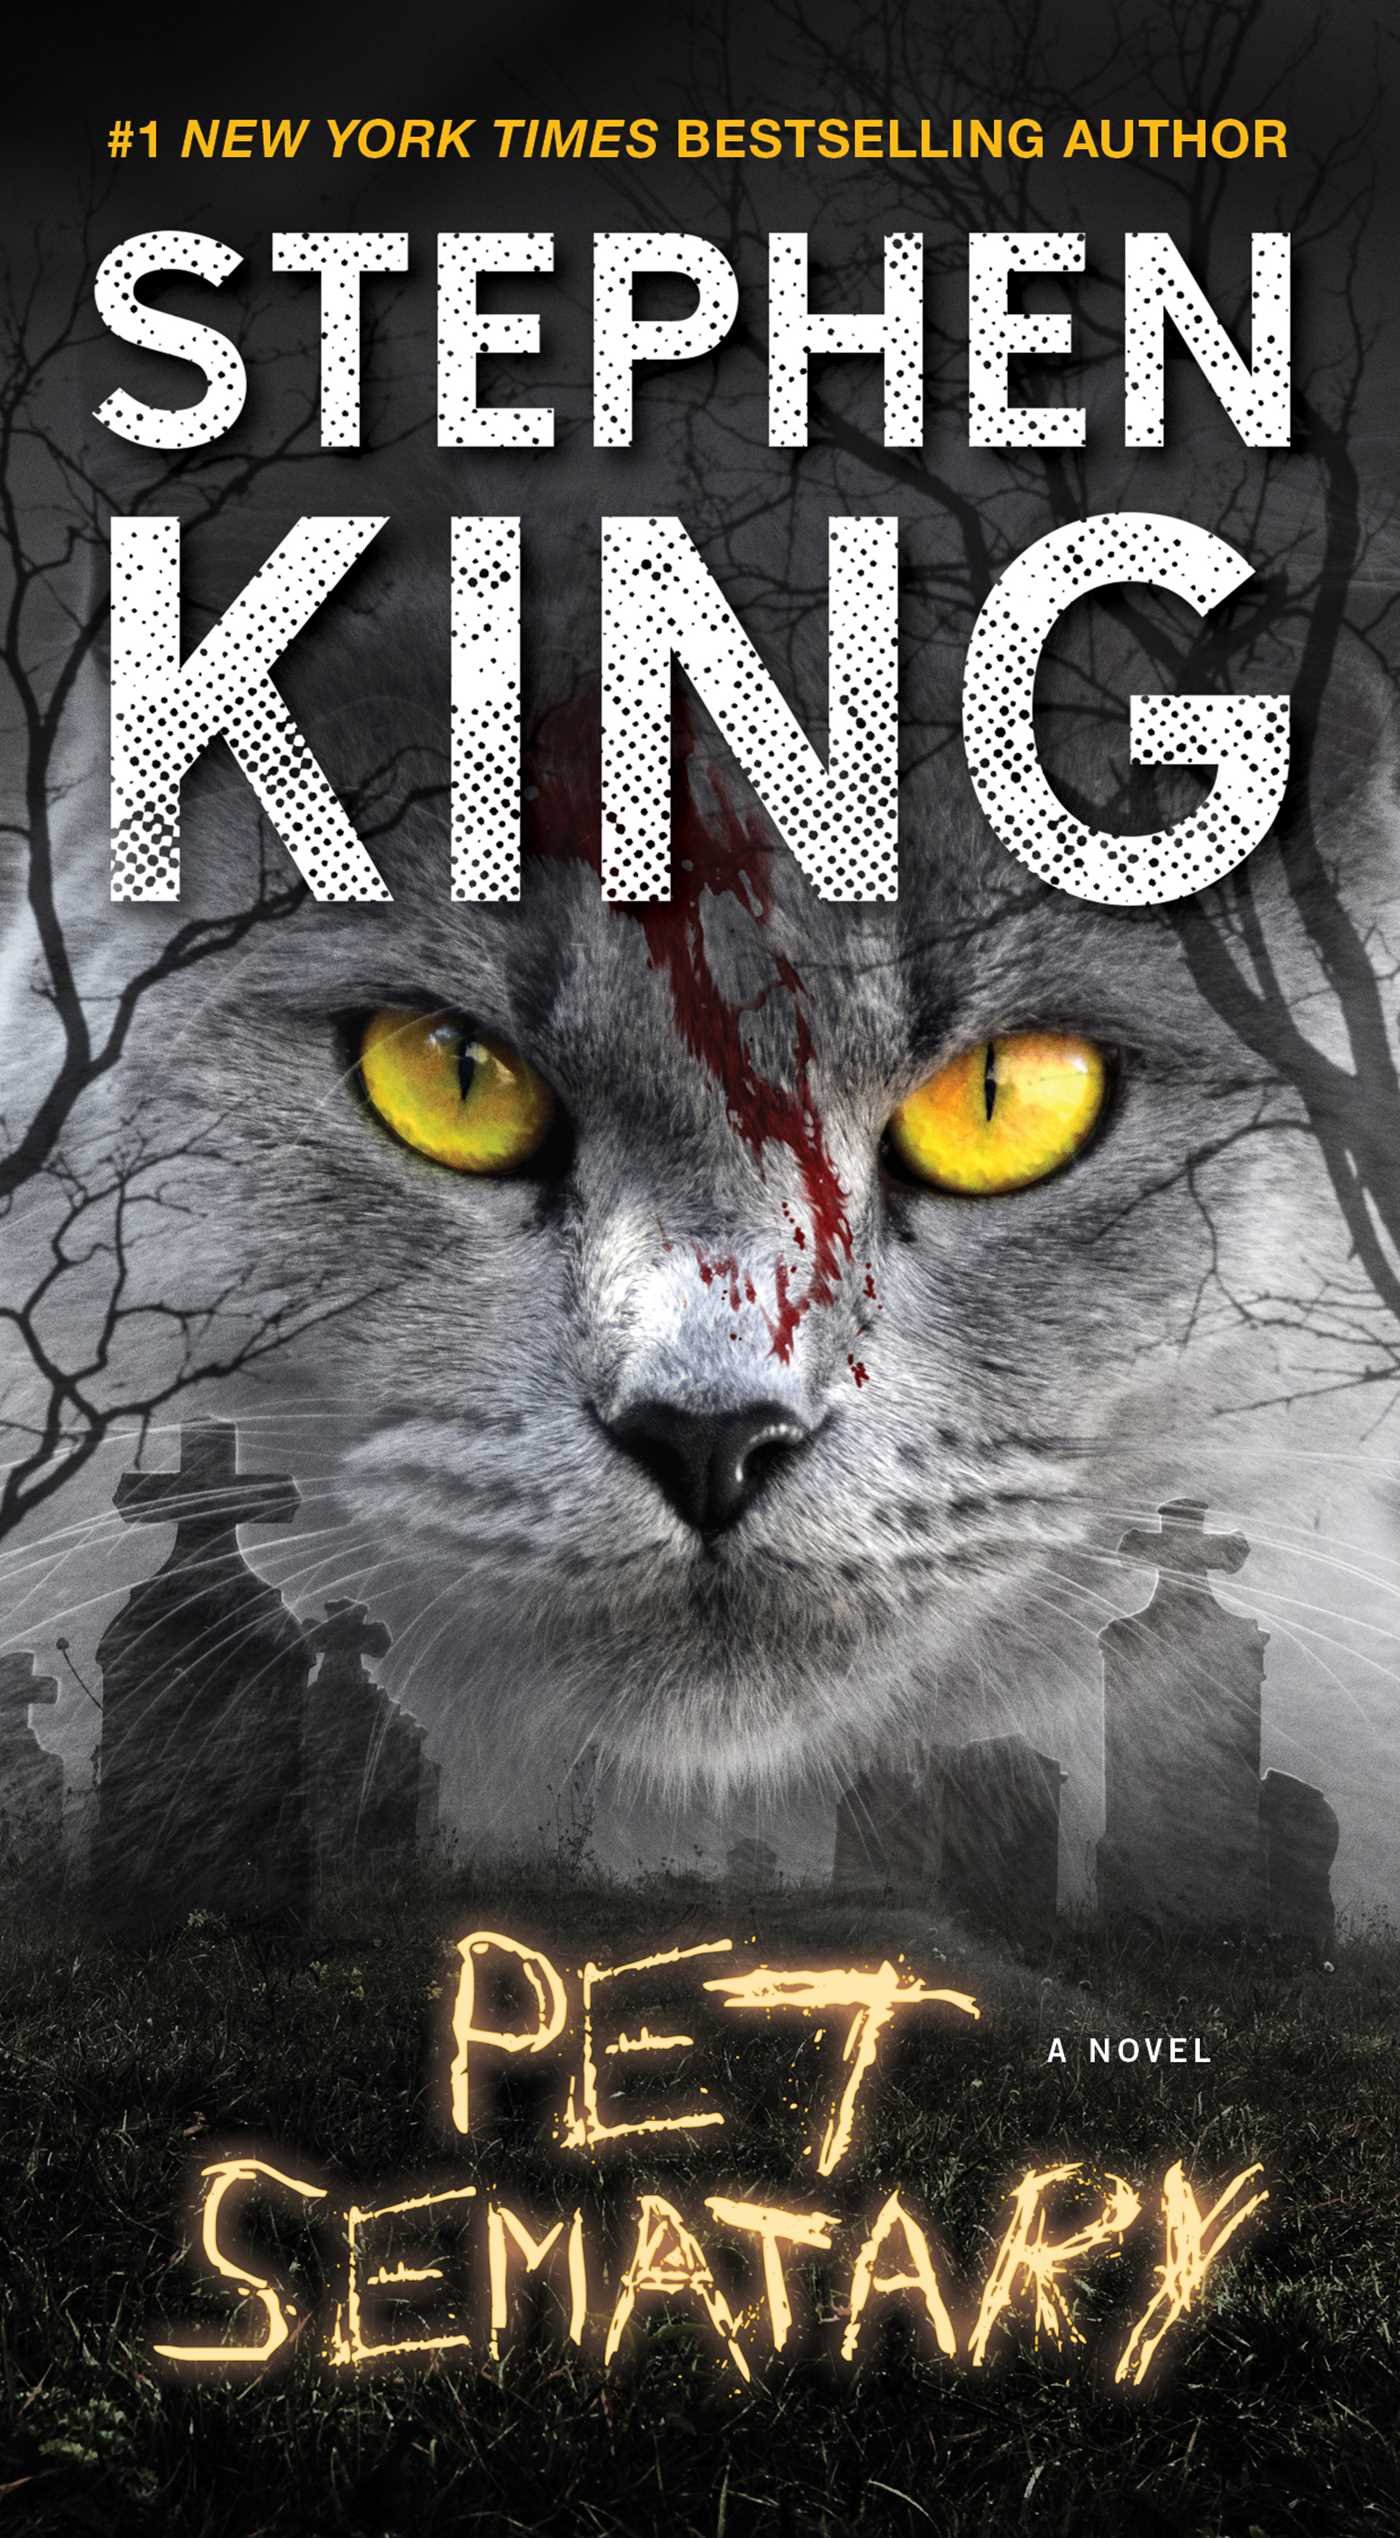 Stephen King audiobook: Pet Sematary